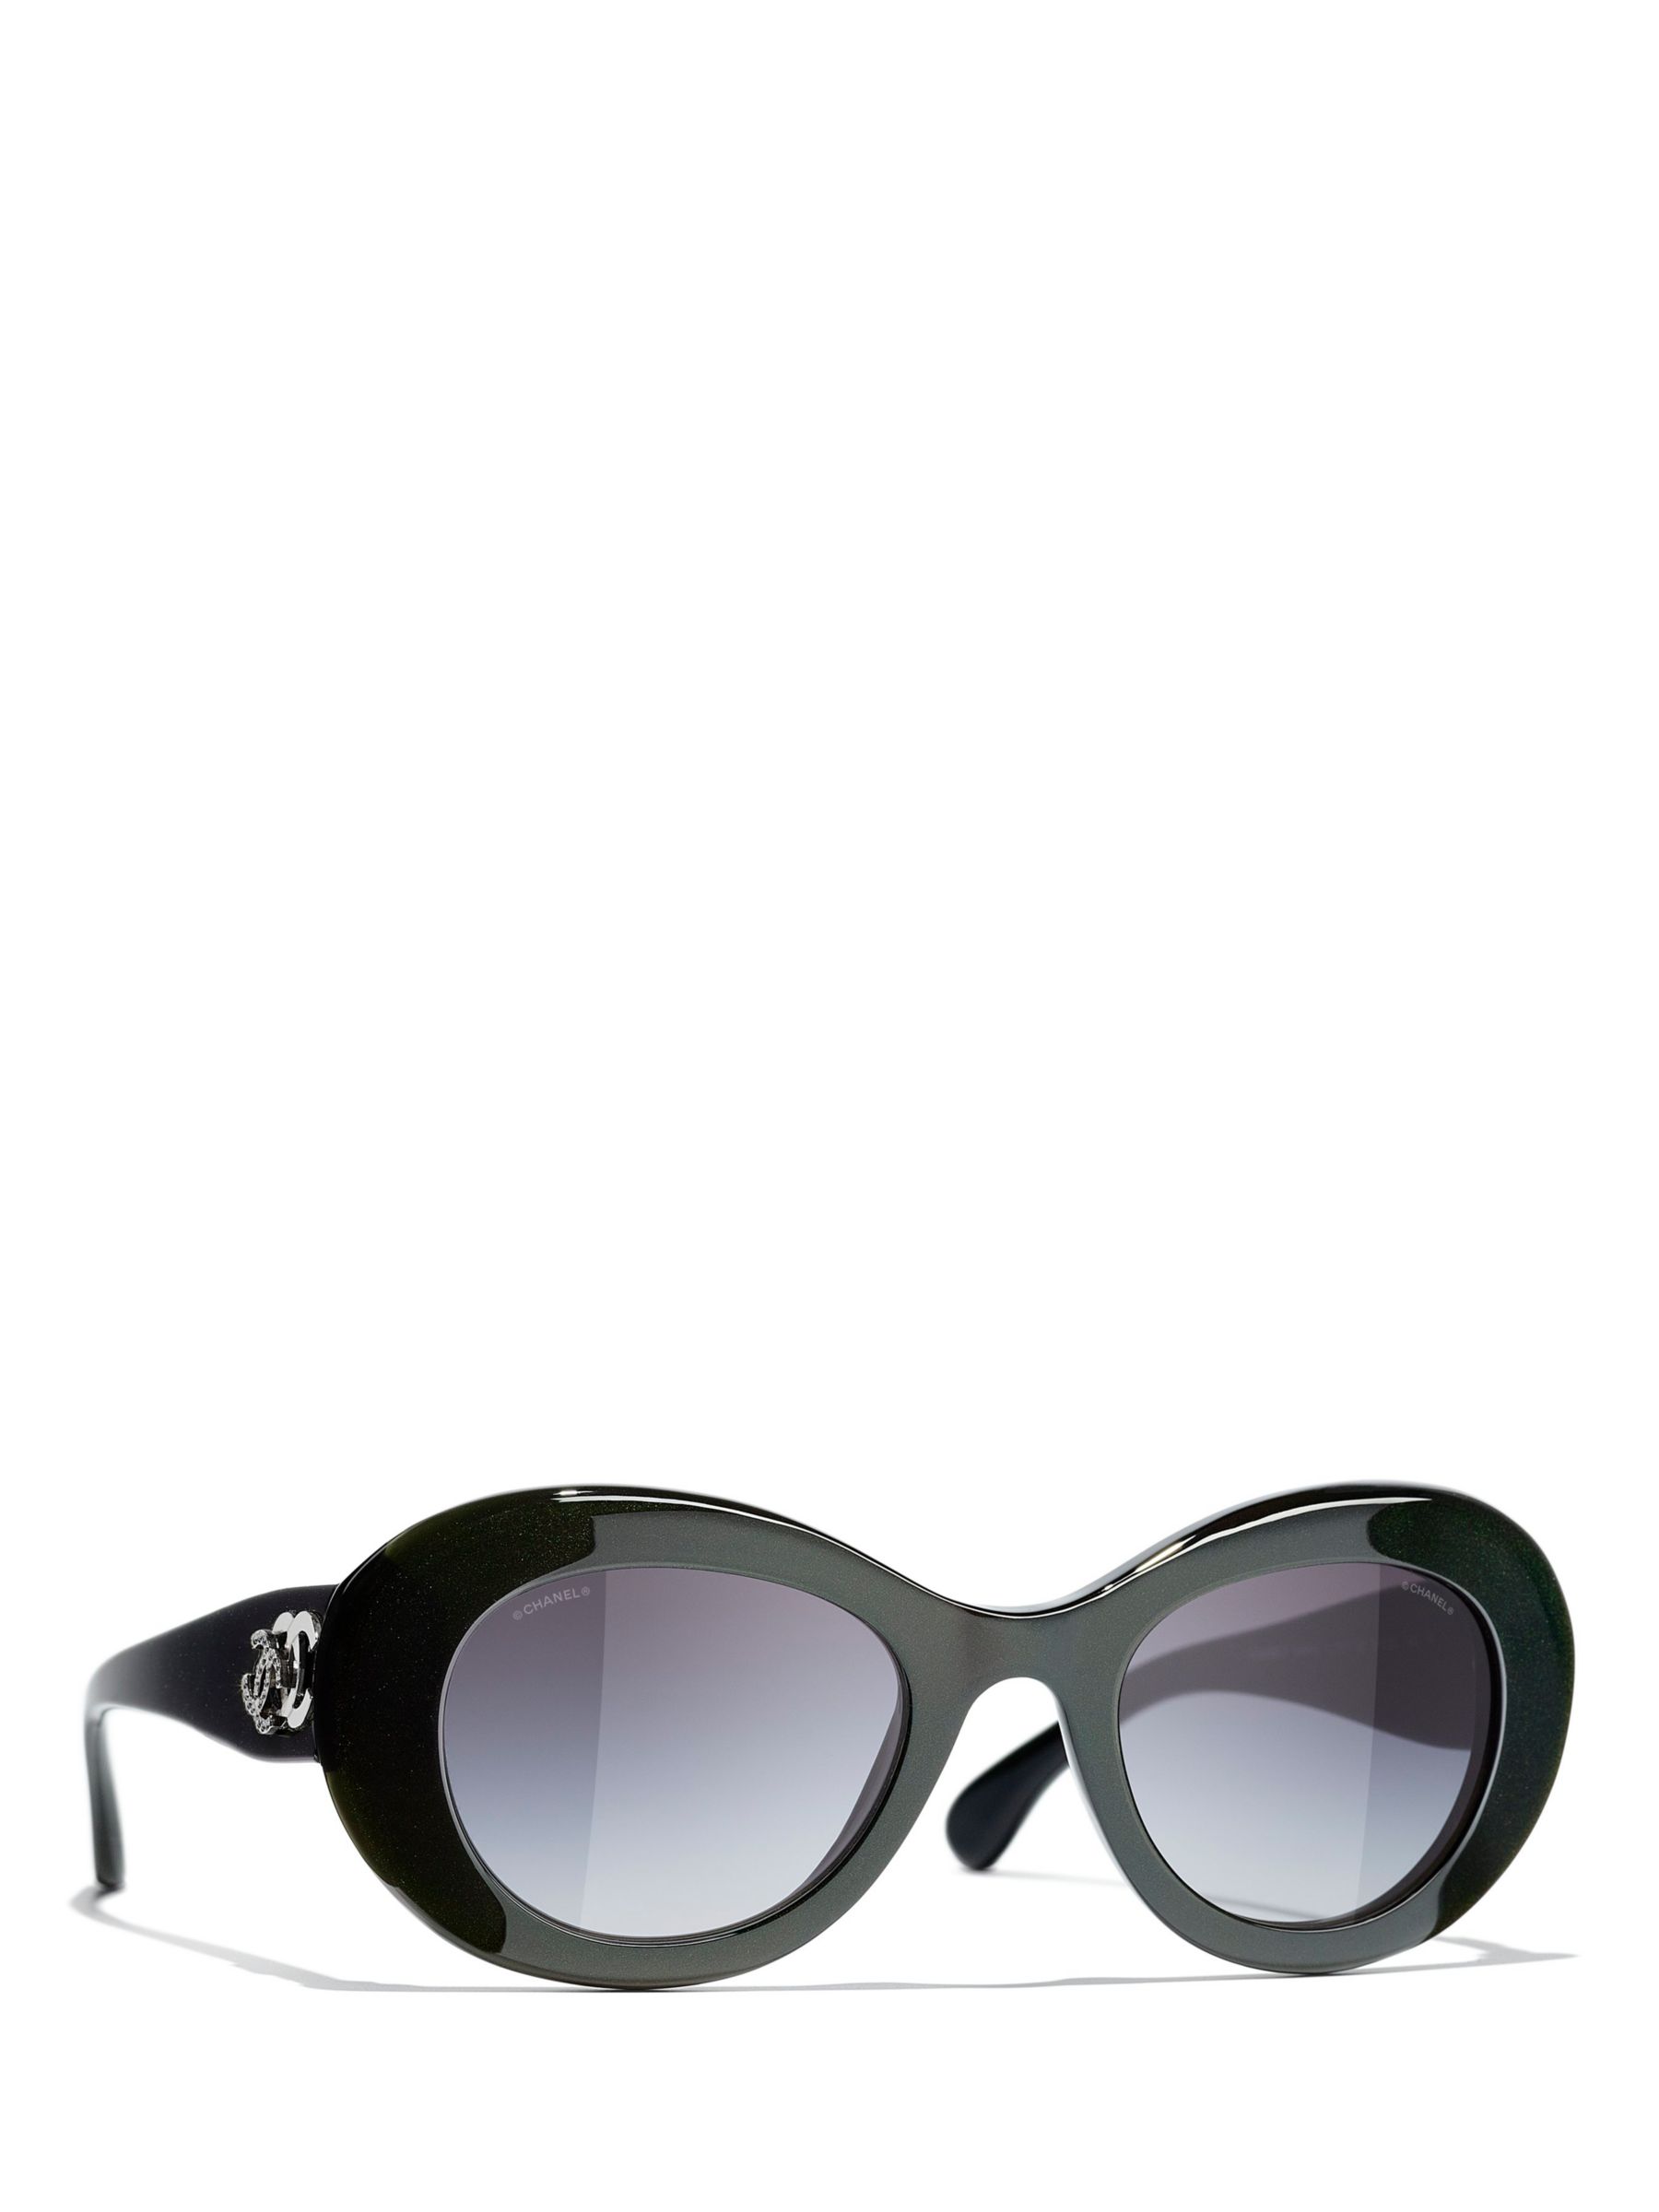 CHANEL Black Oval Sunglasses for Men for sale